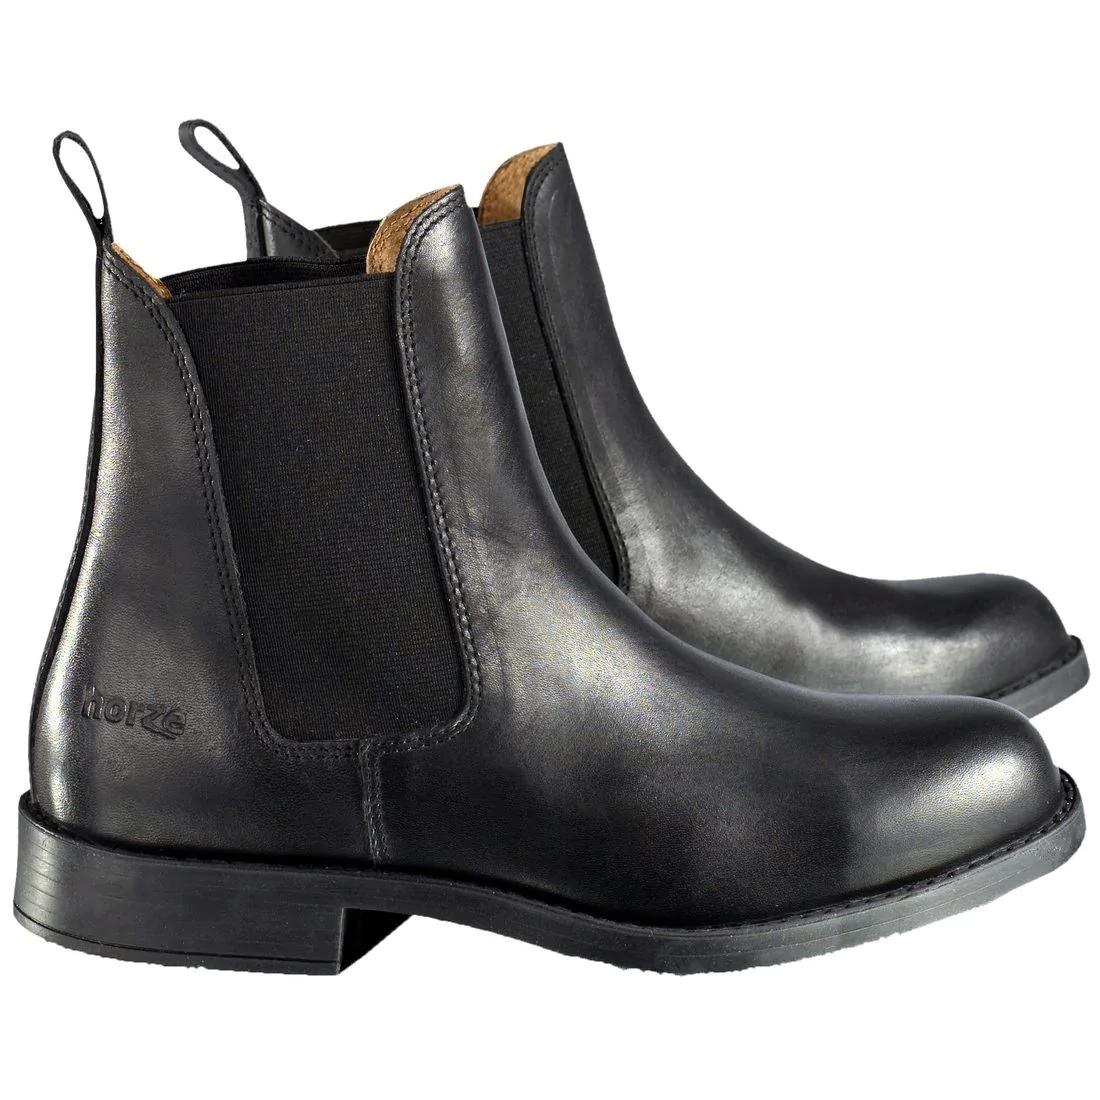 Horze Classic Leather Jodhpur Boots